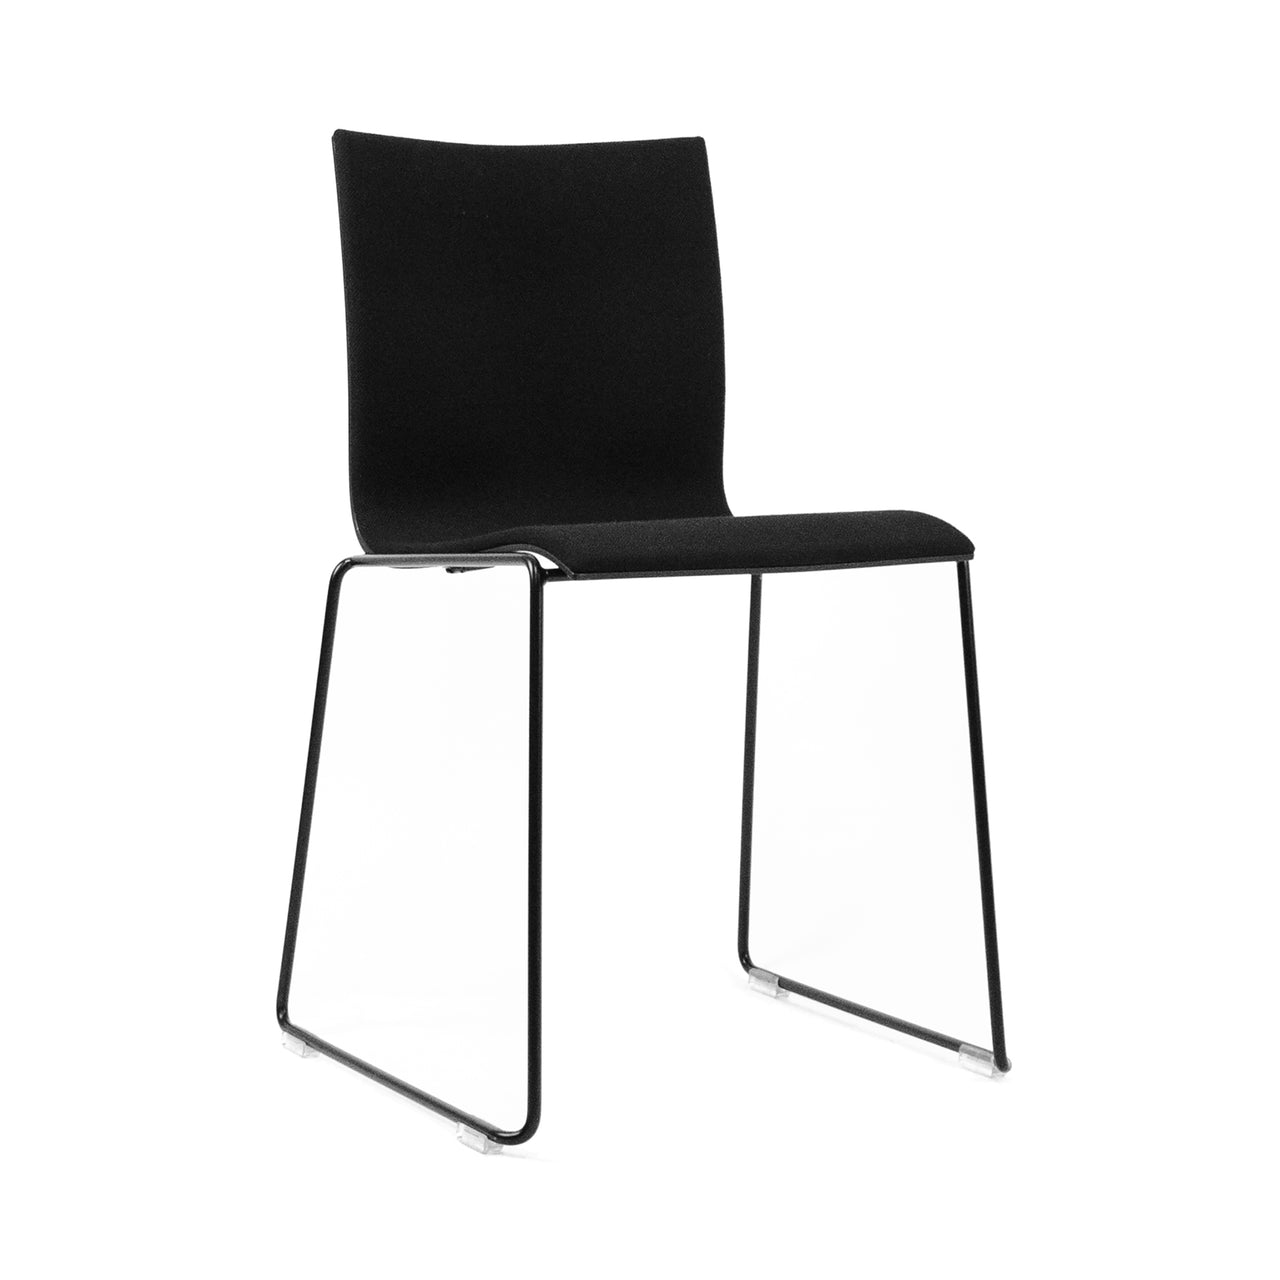 Chairik 107 Chair: Sled Base + Plastic + Black + Polwder Coated Black